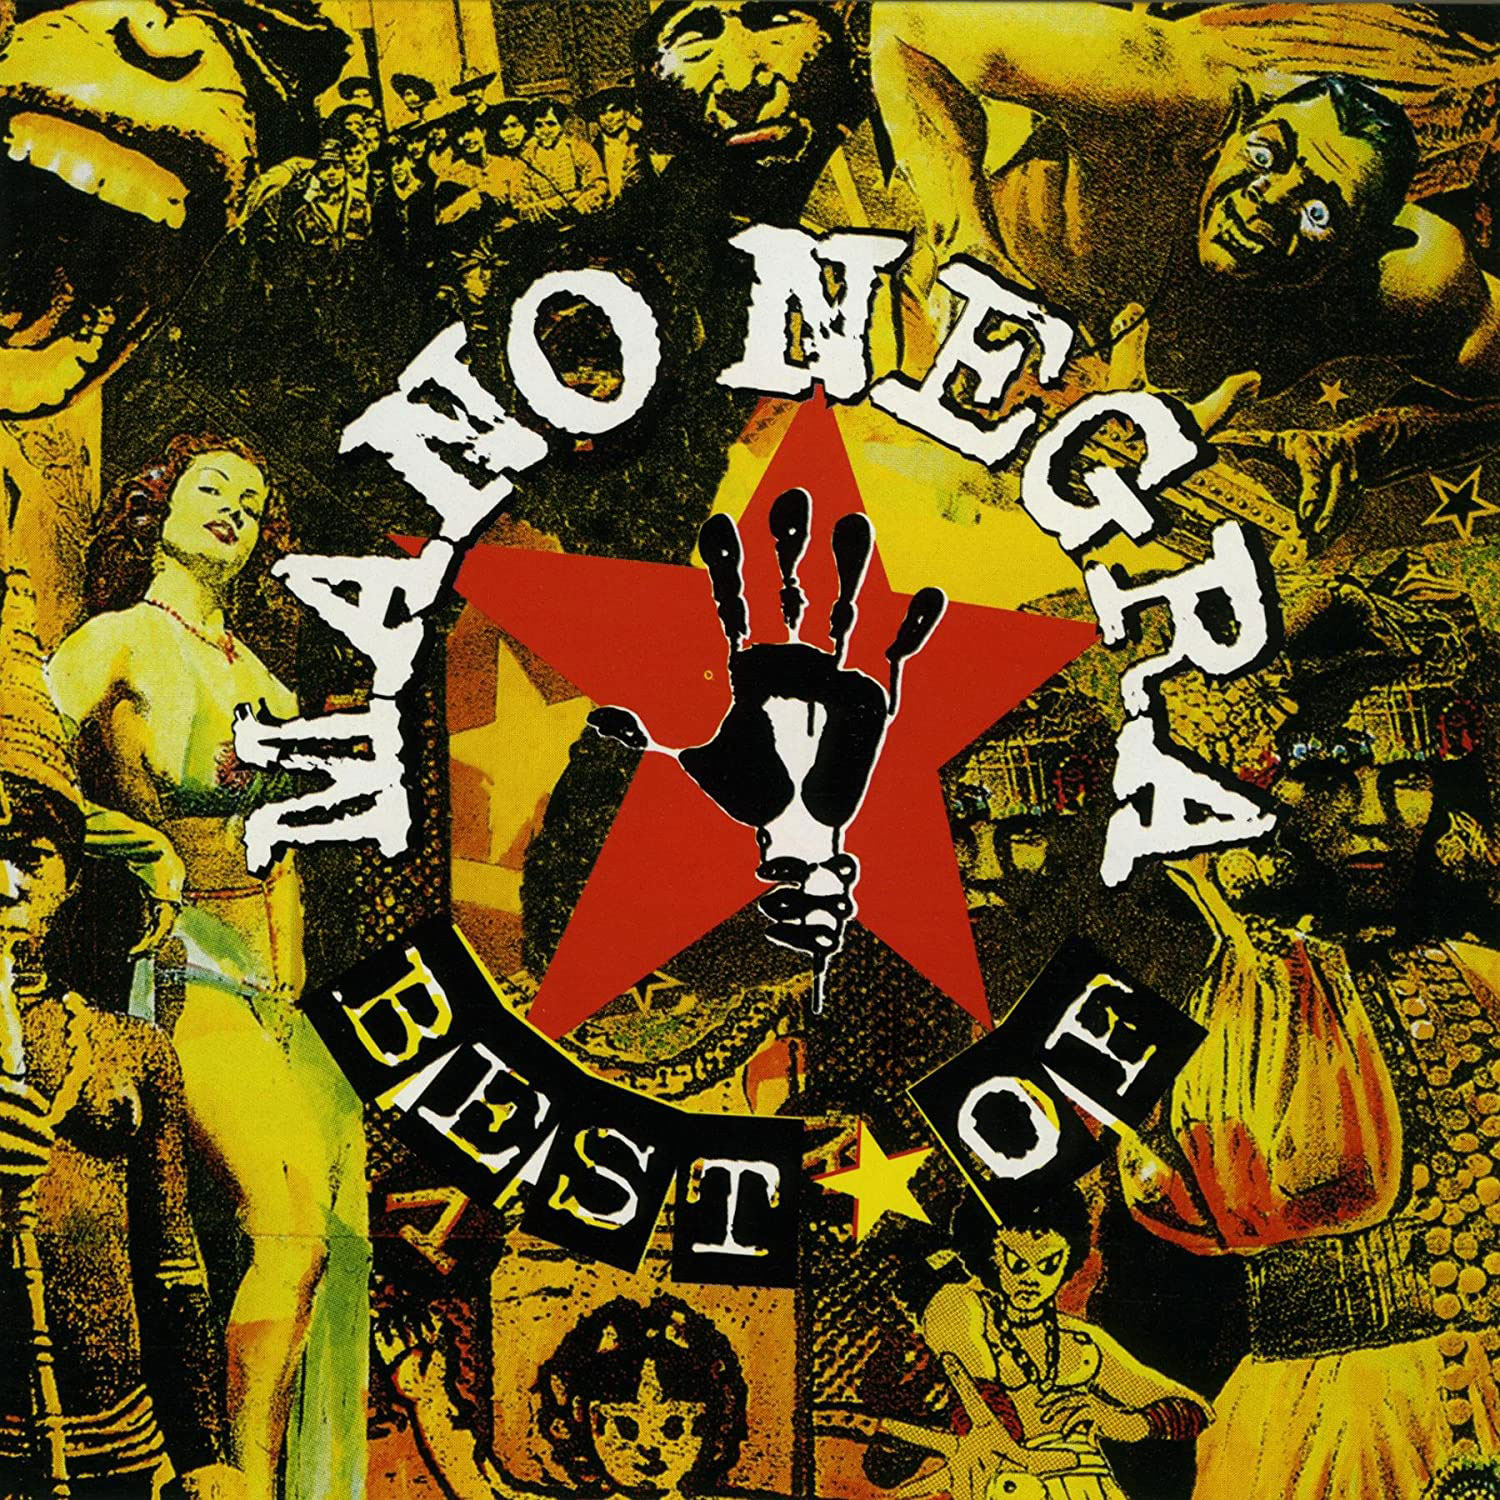 Mano Negra - Best Of